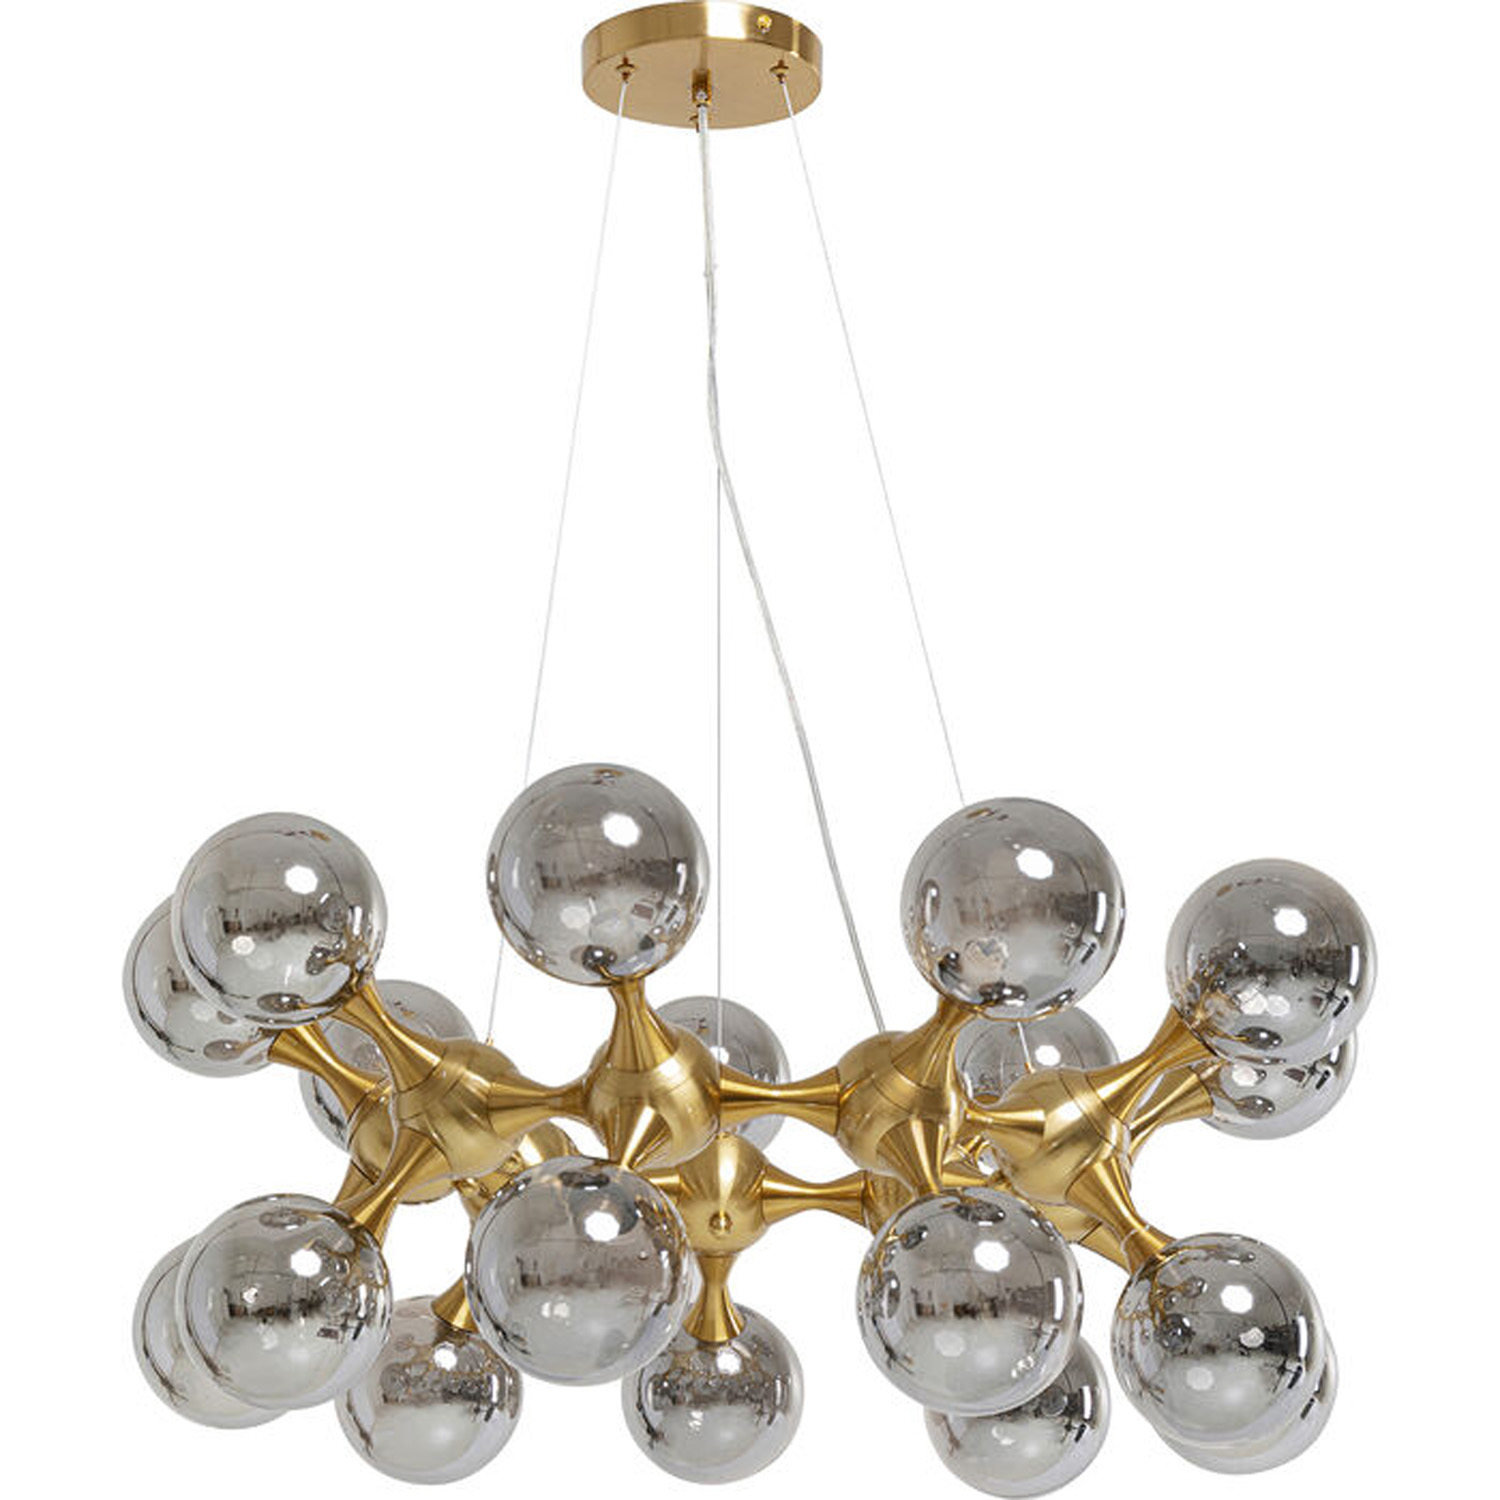 KARE DESIGN Atomic Balls loftlampe - sølv glas og messing stål